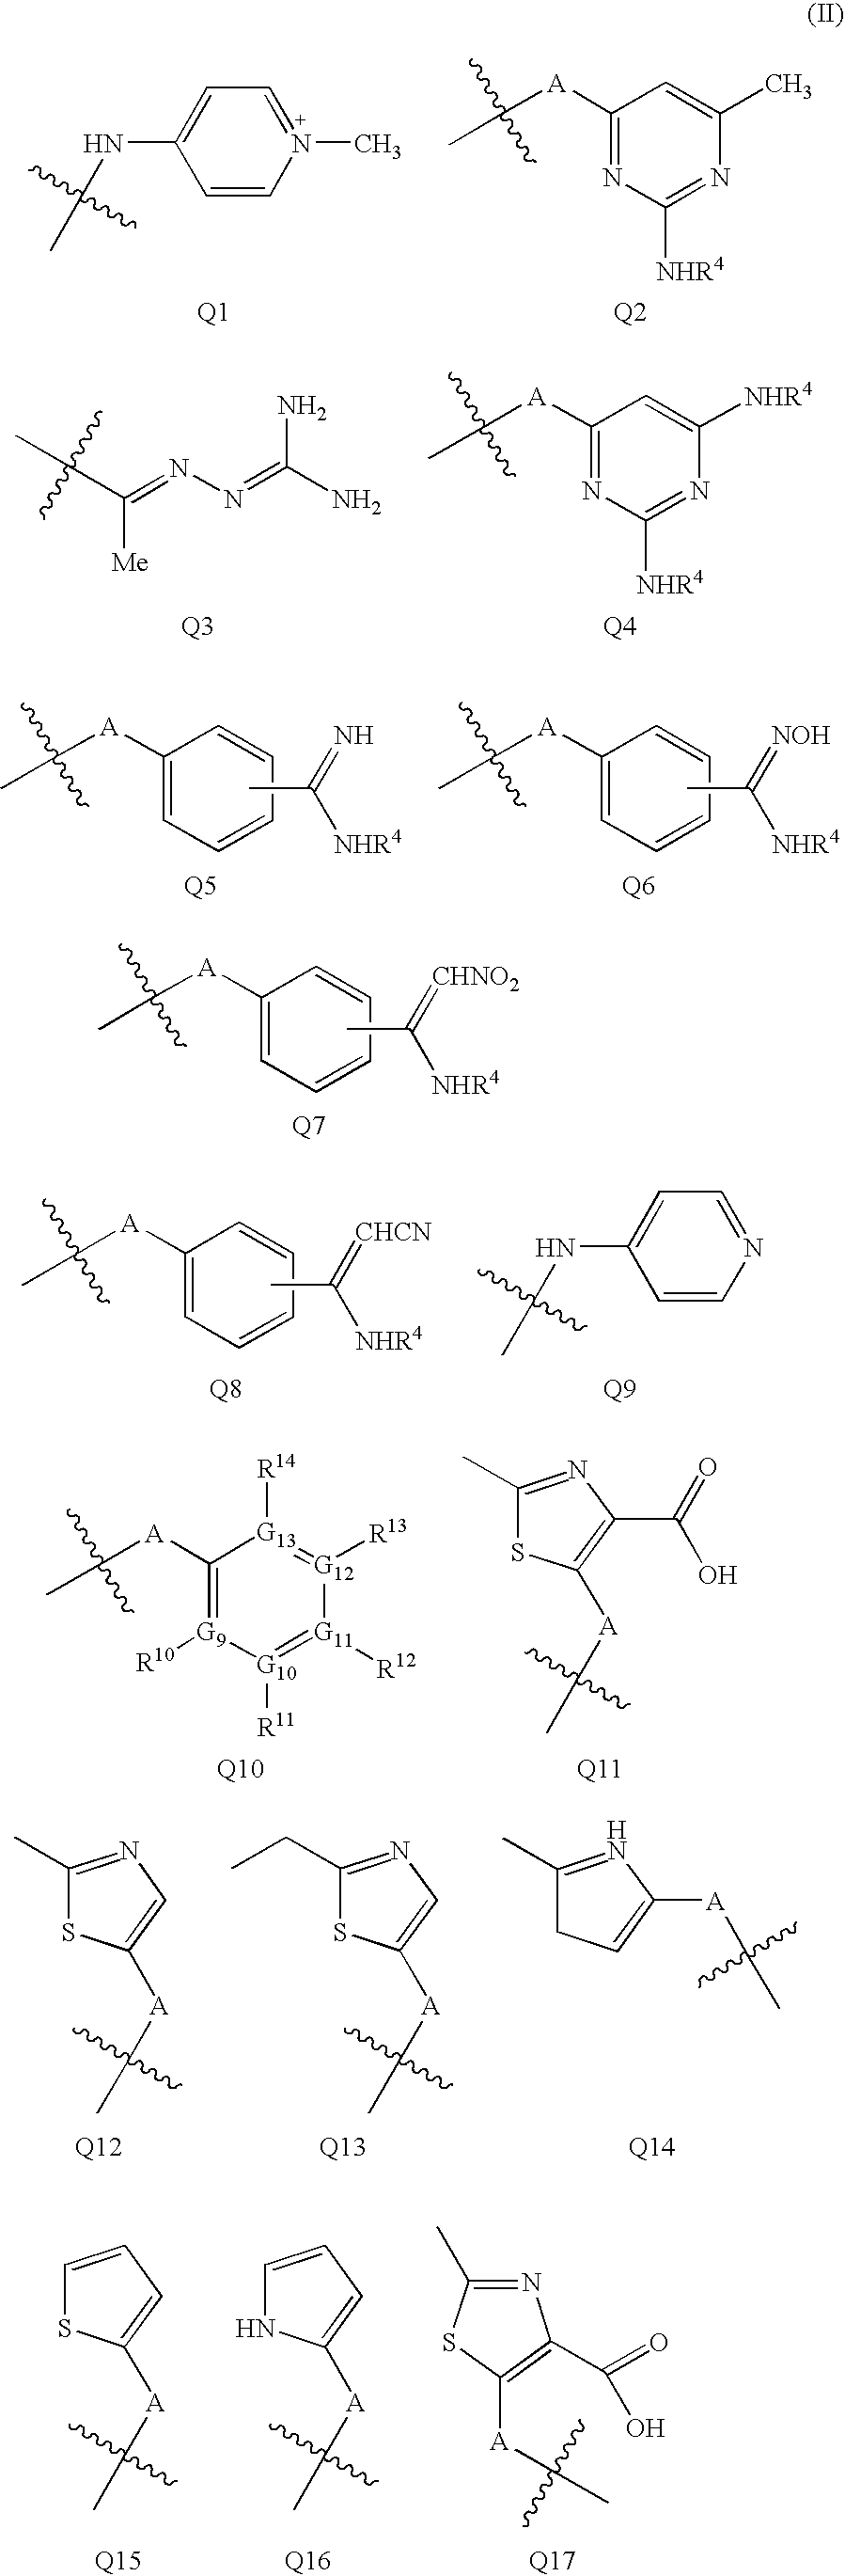 Quinoline derivatives for modulating DNA methylation